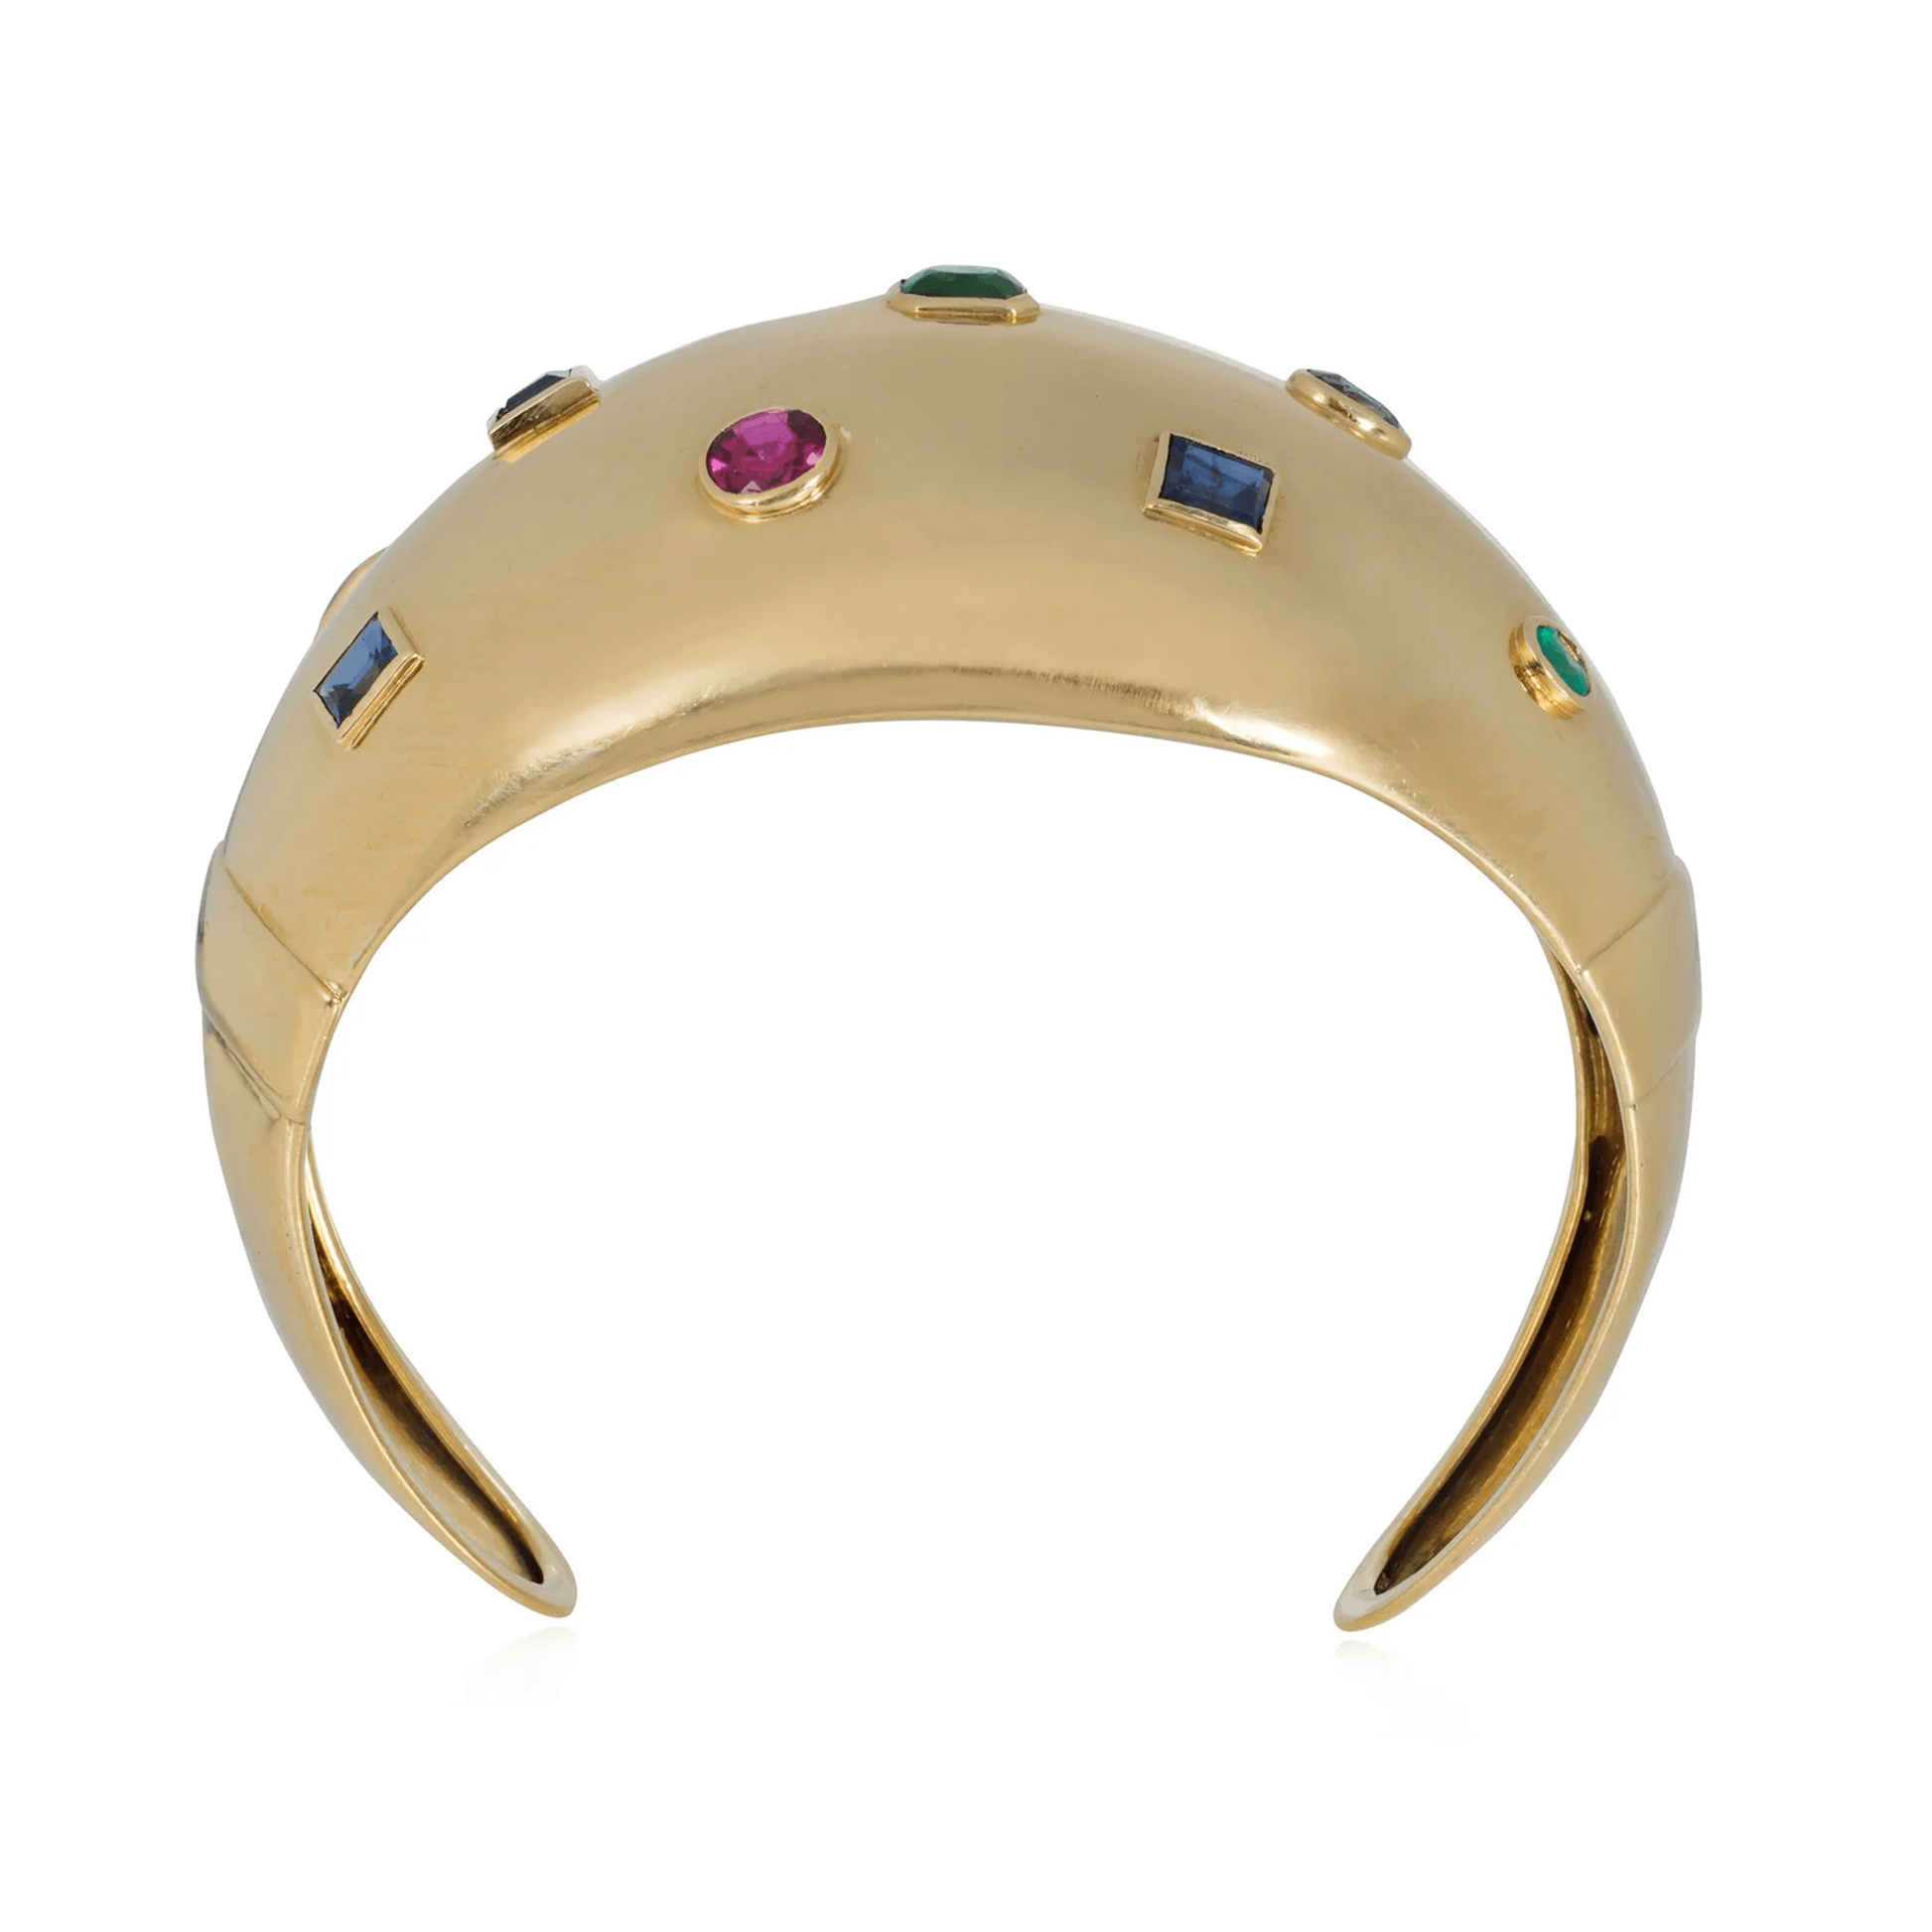 Suzanne Belperron French Retro 18KT Yellow Gold Ruby, Emerald & Sapphire Cuff Bracelet profile